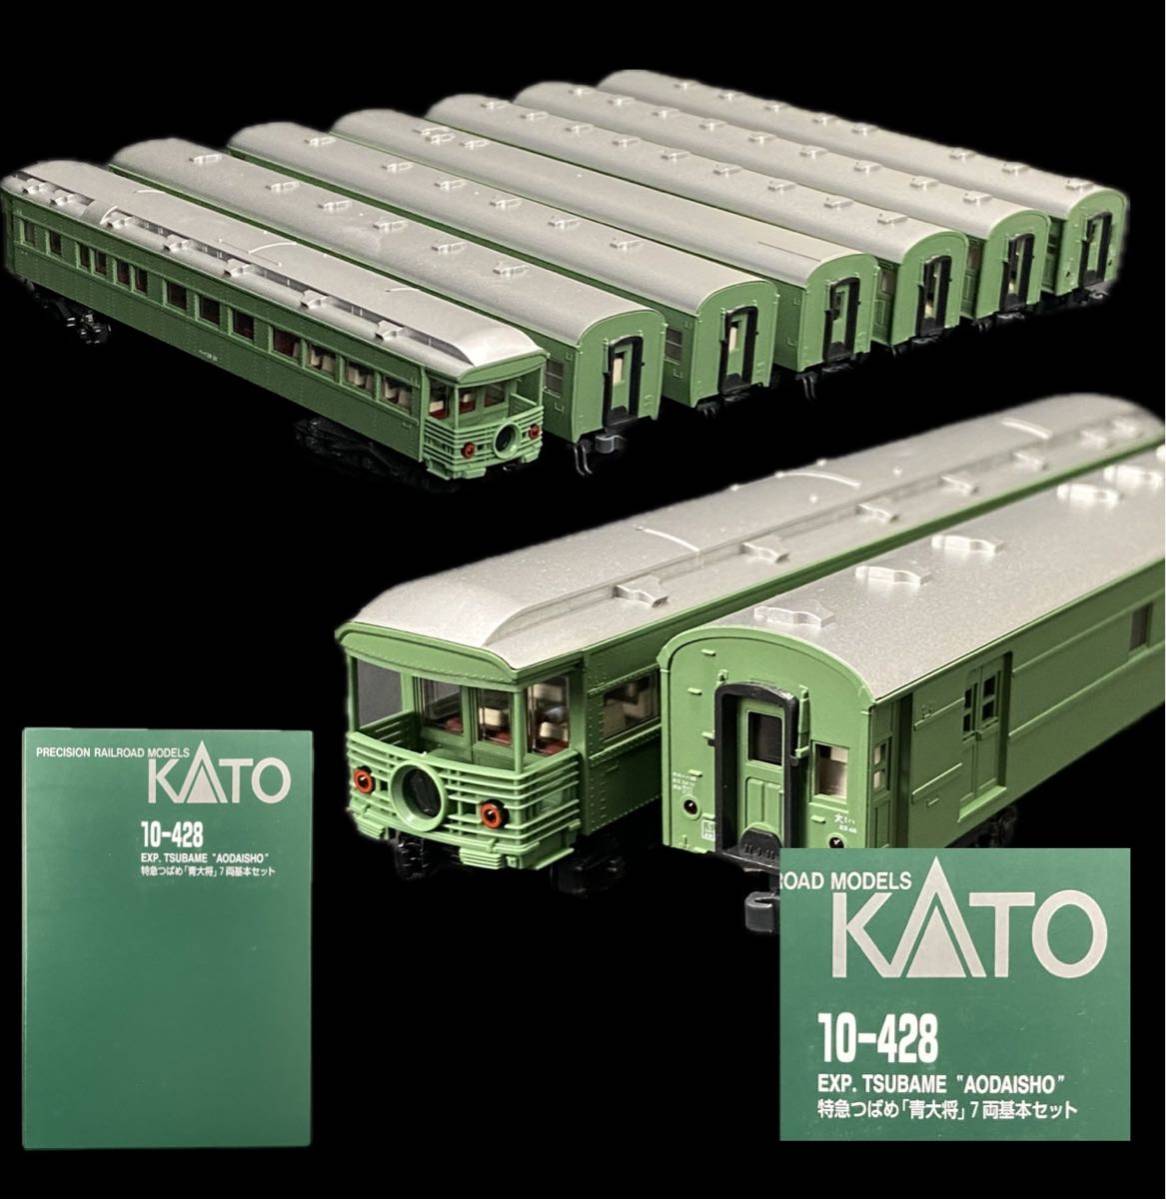 SG-213 絶版 鉄道模型 Nゲージ KATO 10-428 特急つばめ「青大将」7両基本セット 未使用 未走行 客車 AODAISHO 国鉄 関水金属 カトー _画像1